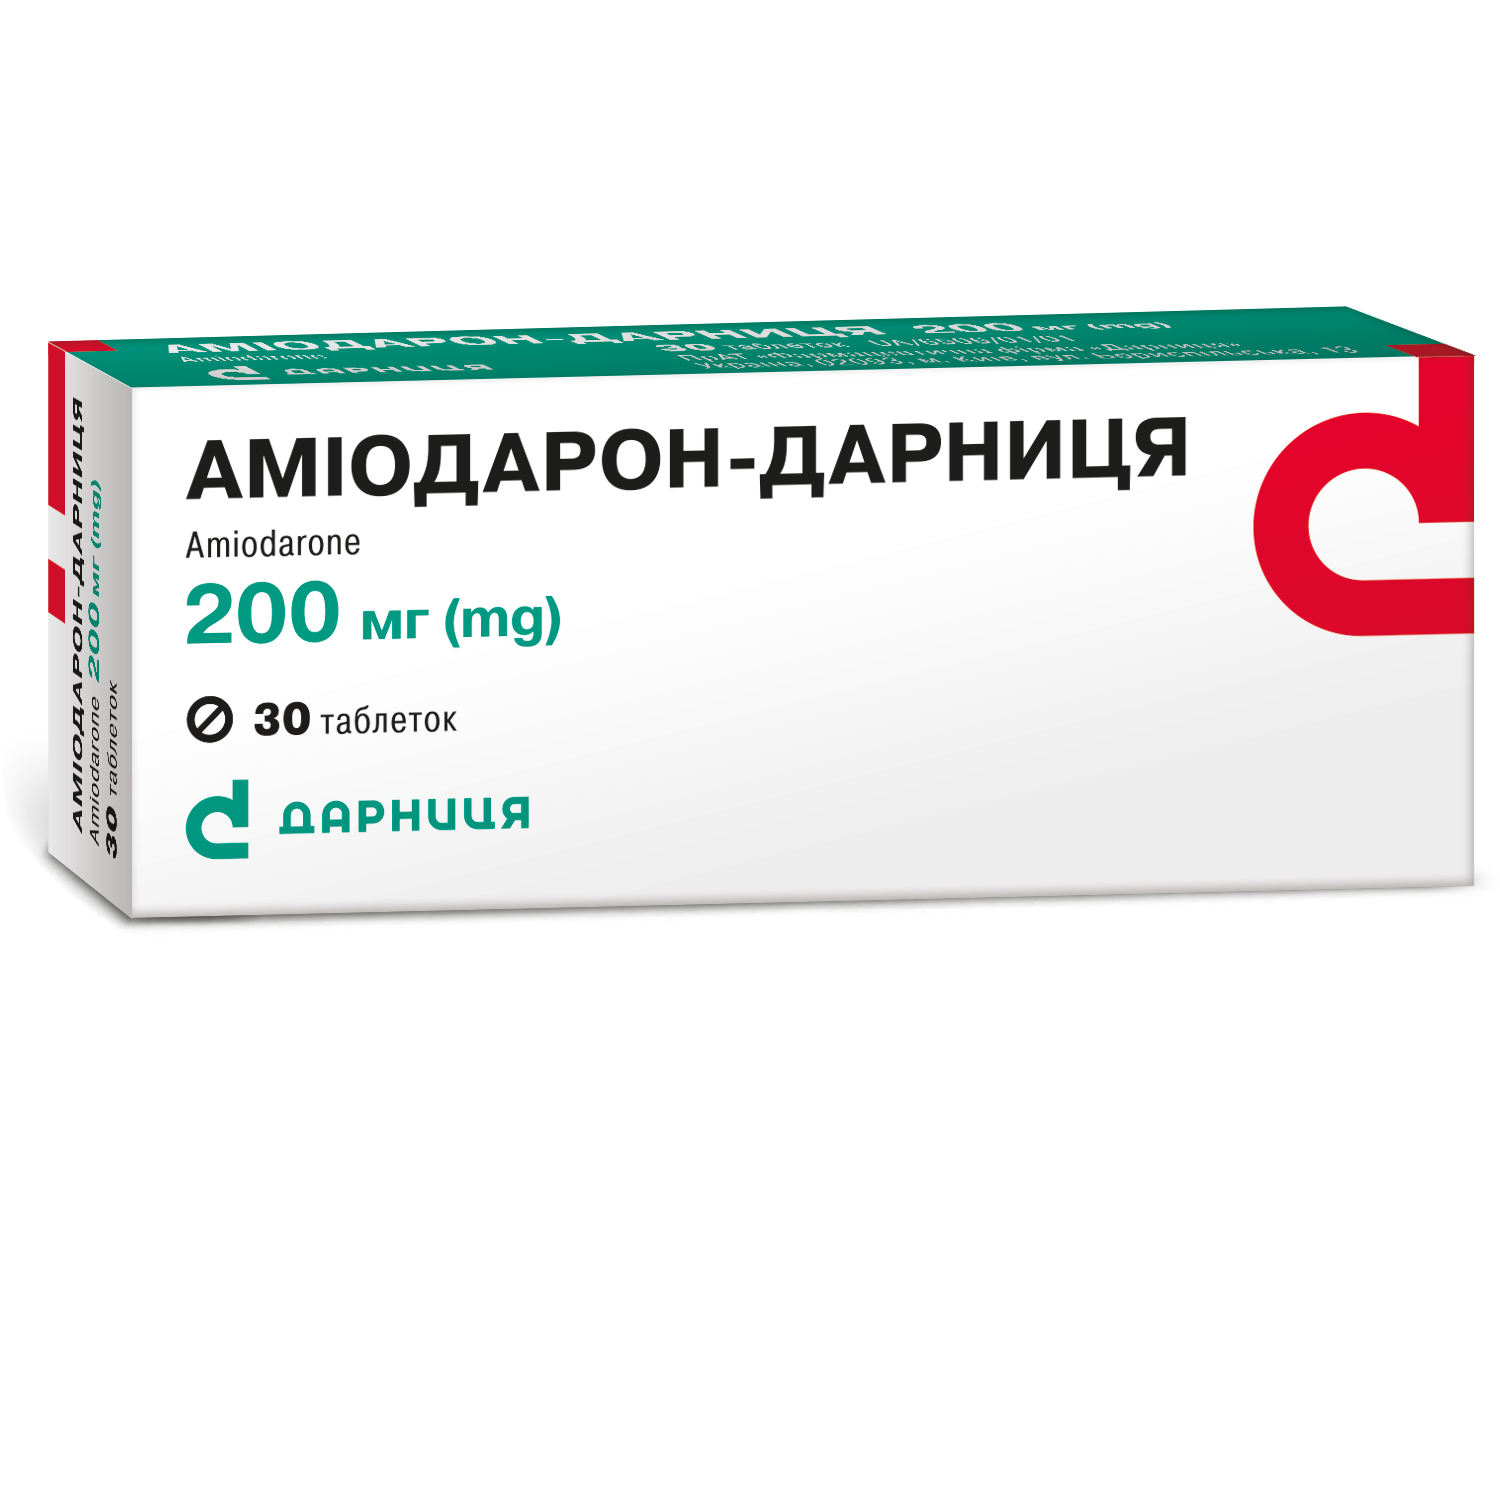 Amiodarone-Darnitsa